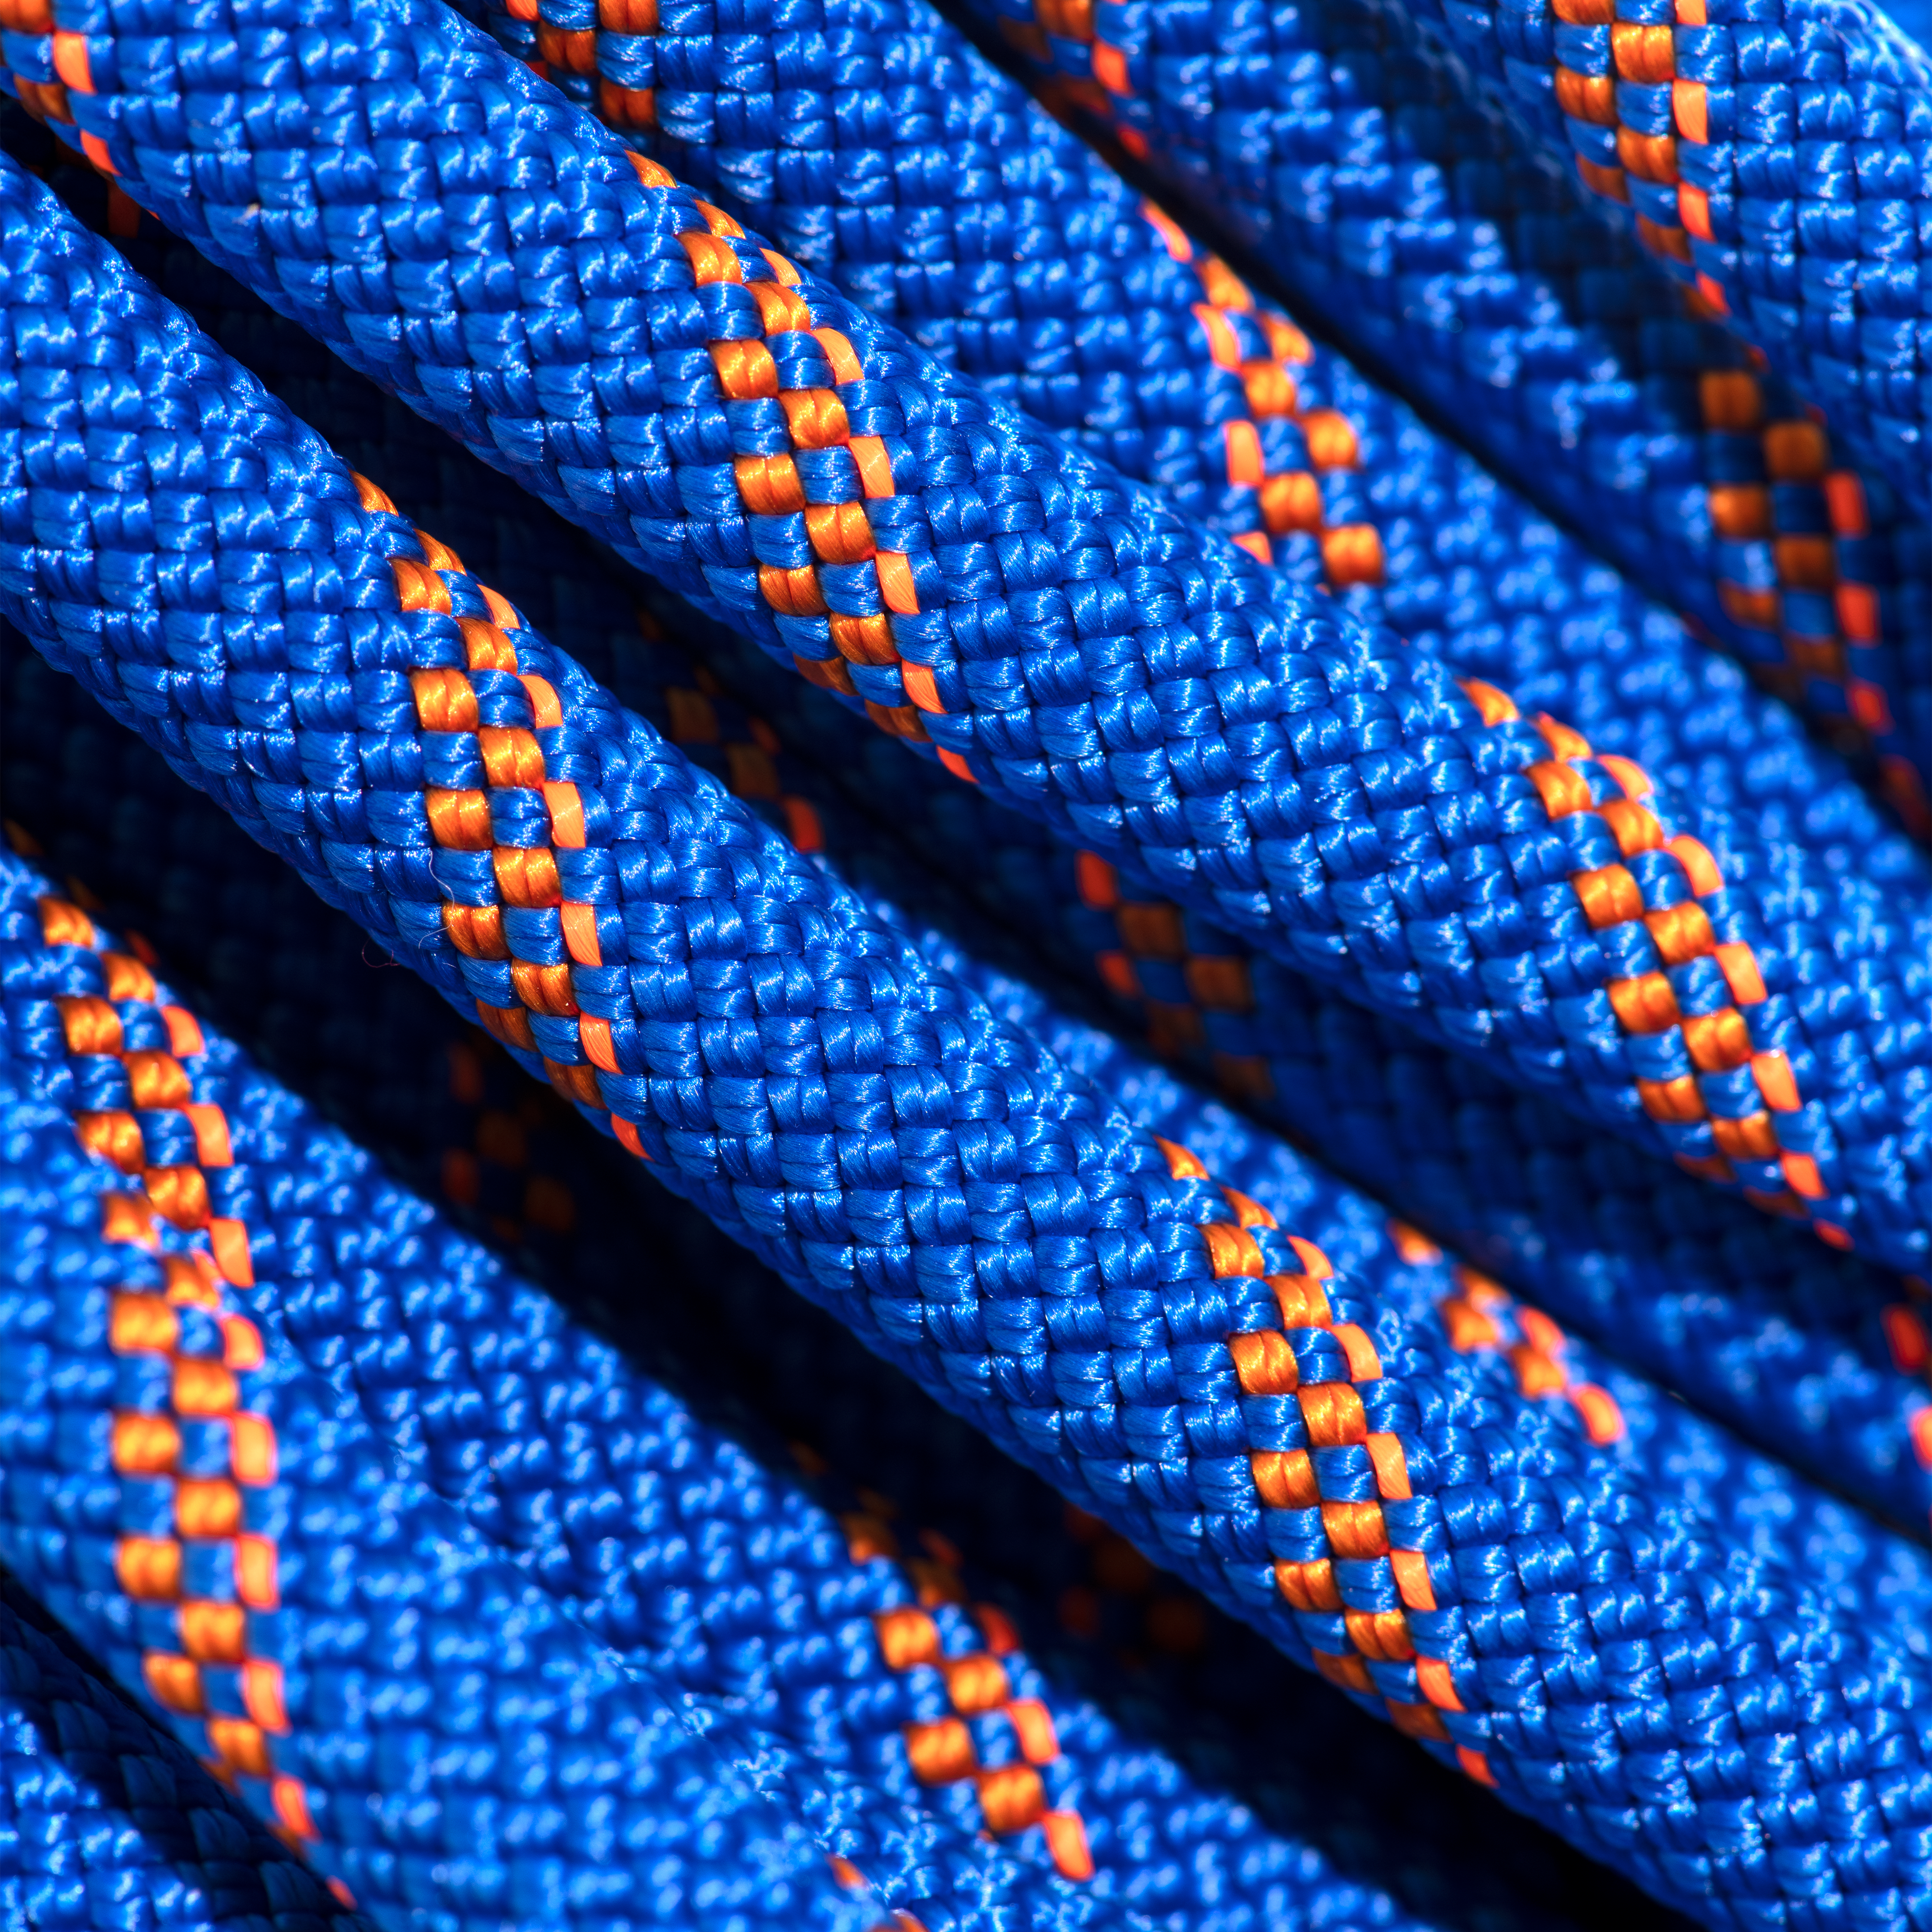 9.0 Alpine Sender Dry Rope product image